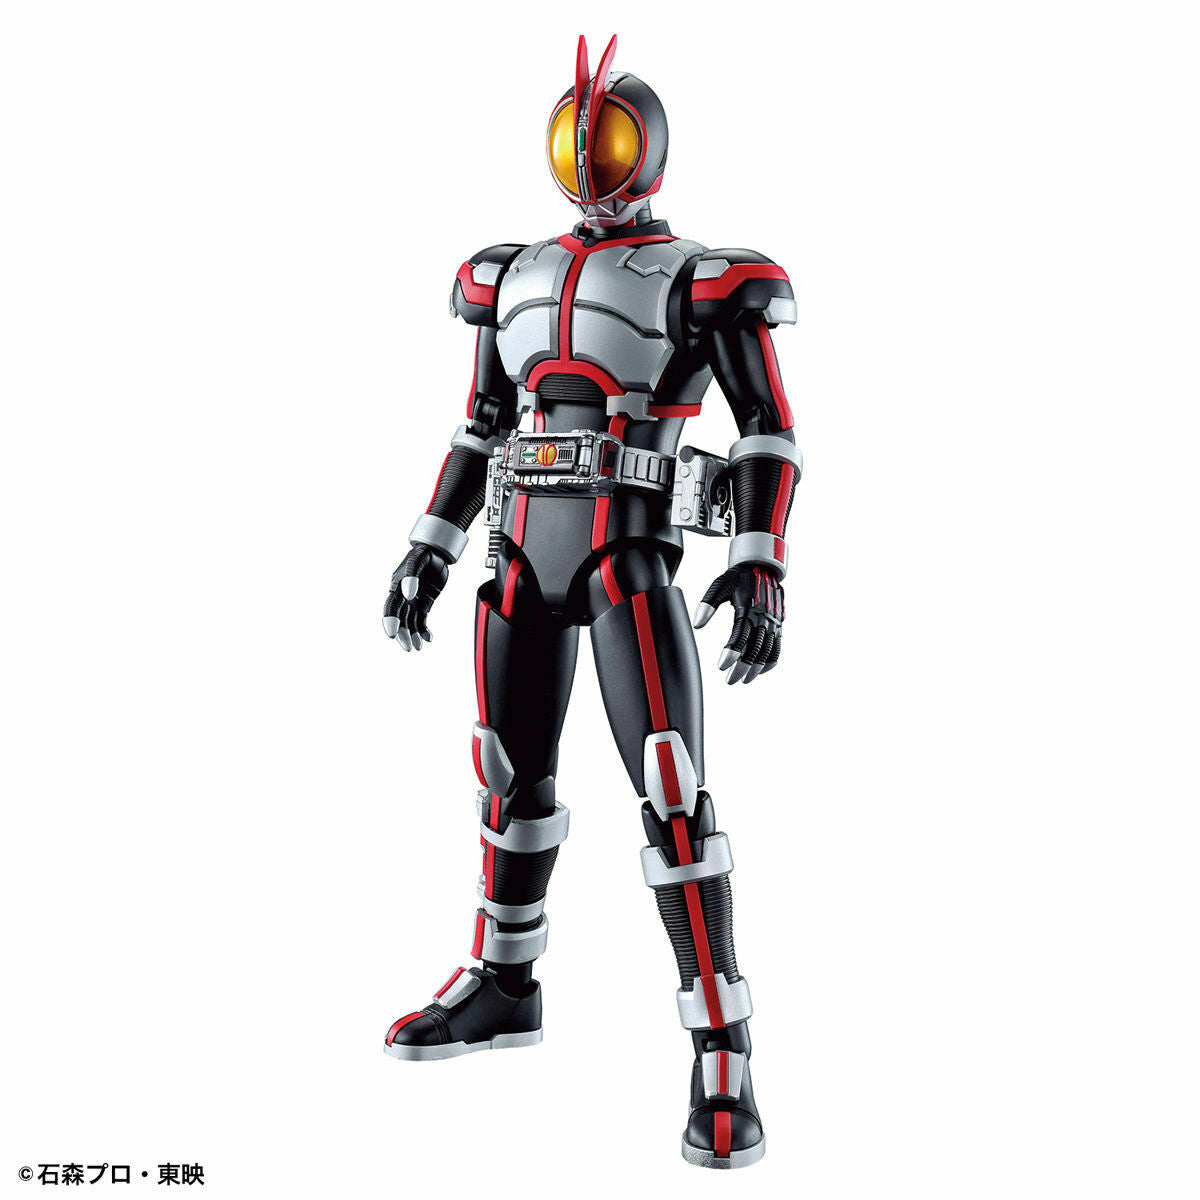 Figure-rise Standard - Kamen Rider Faiz